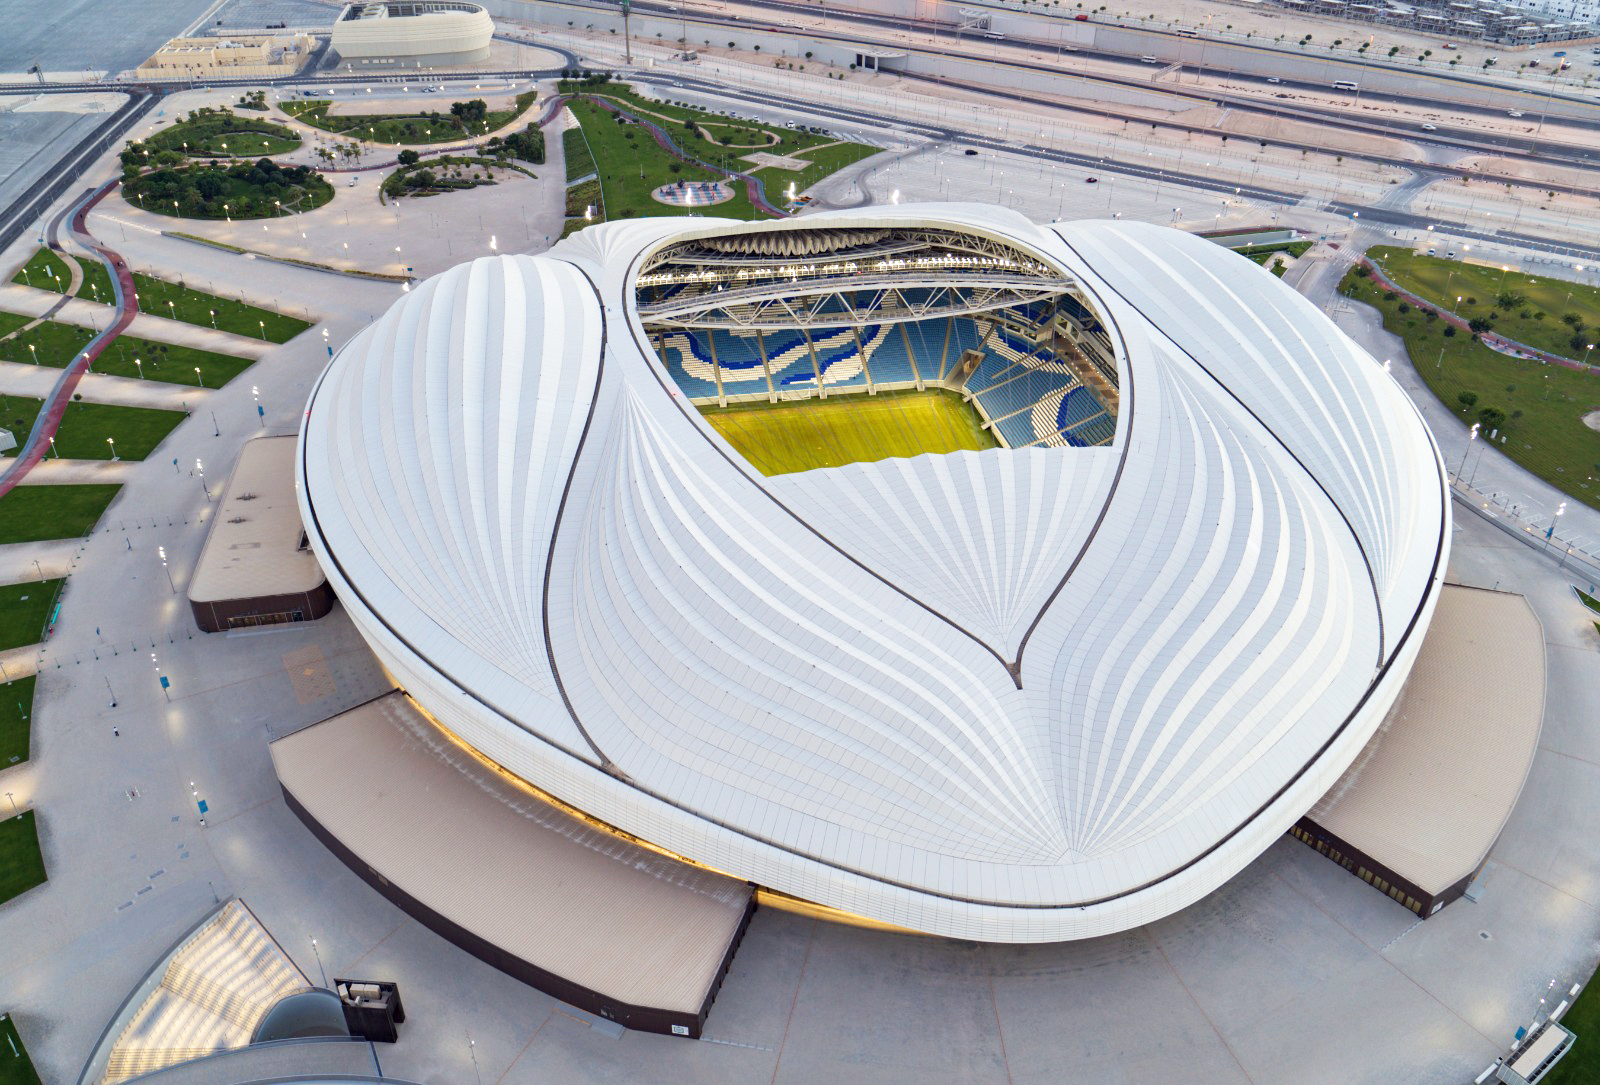 El estadio de Al Janoub, de Zaha Hadid.